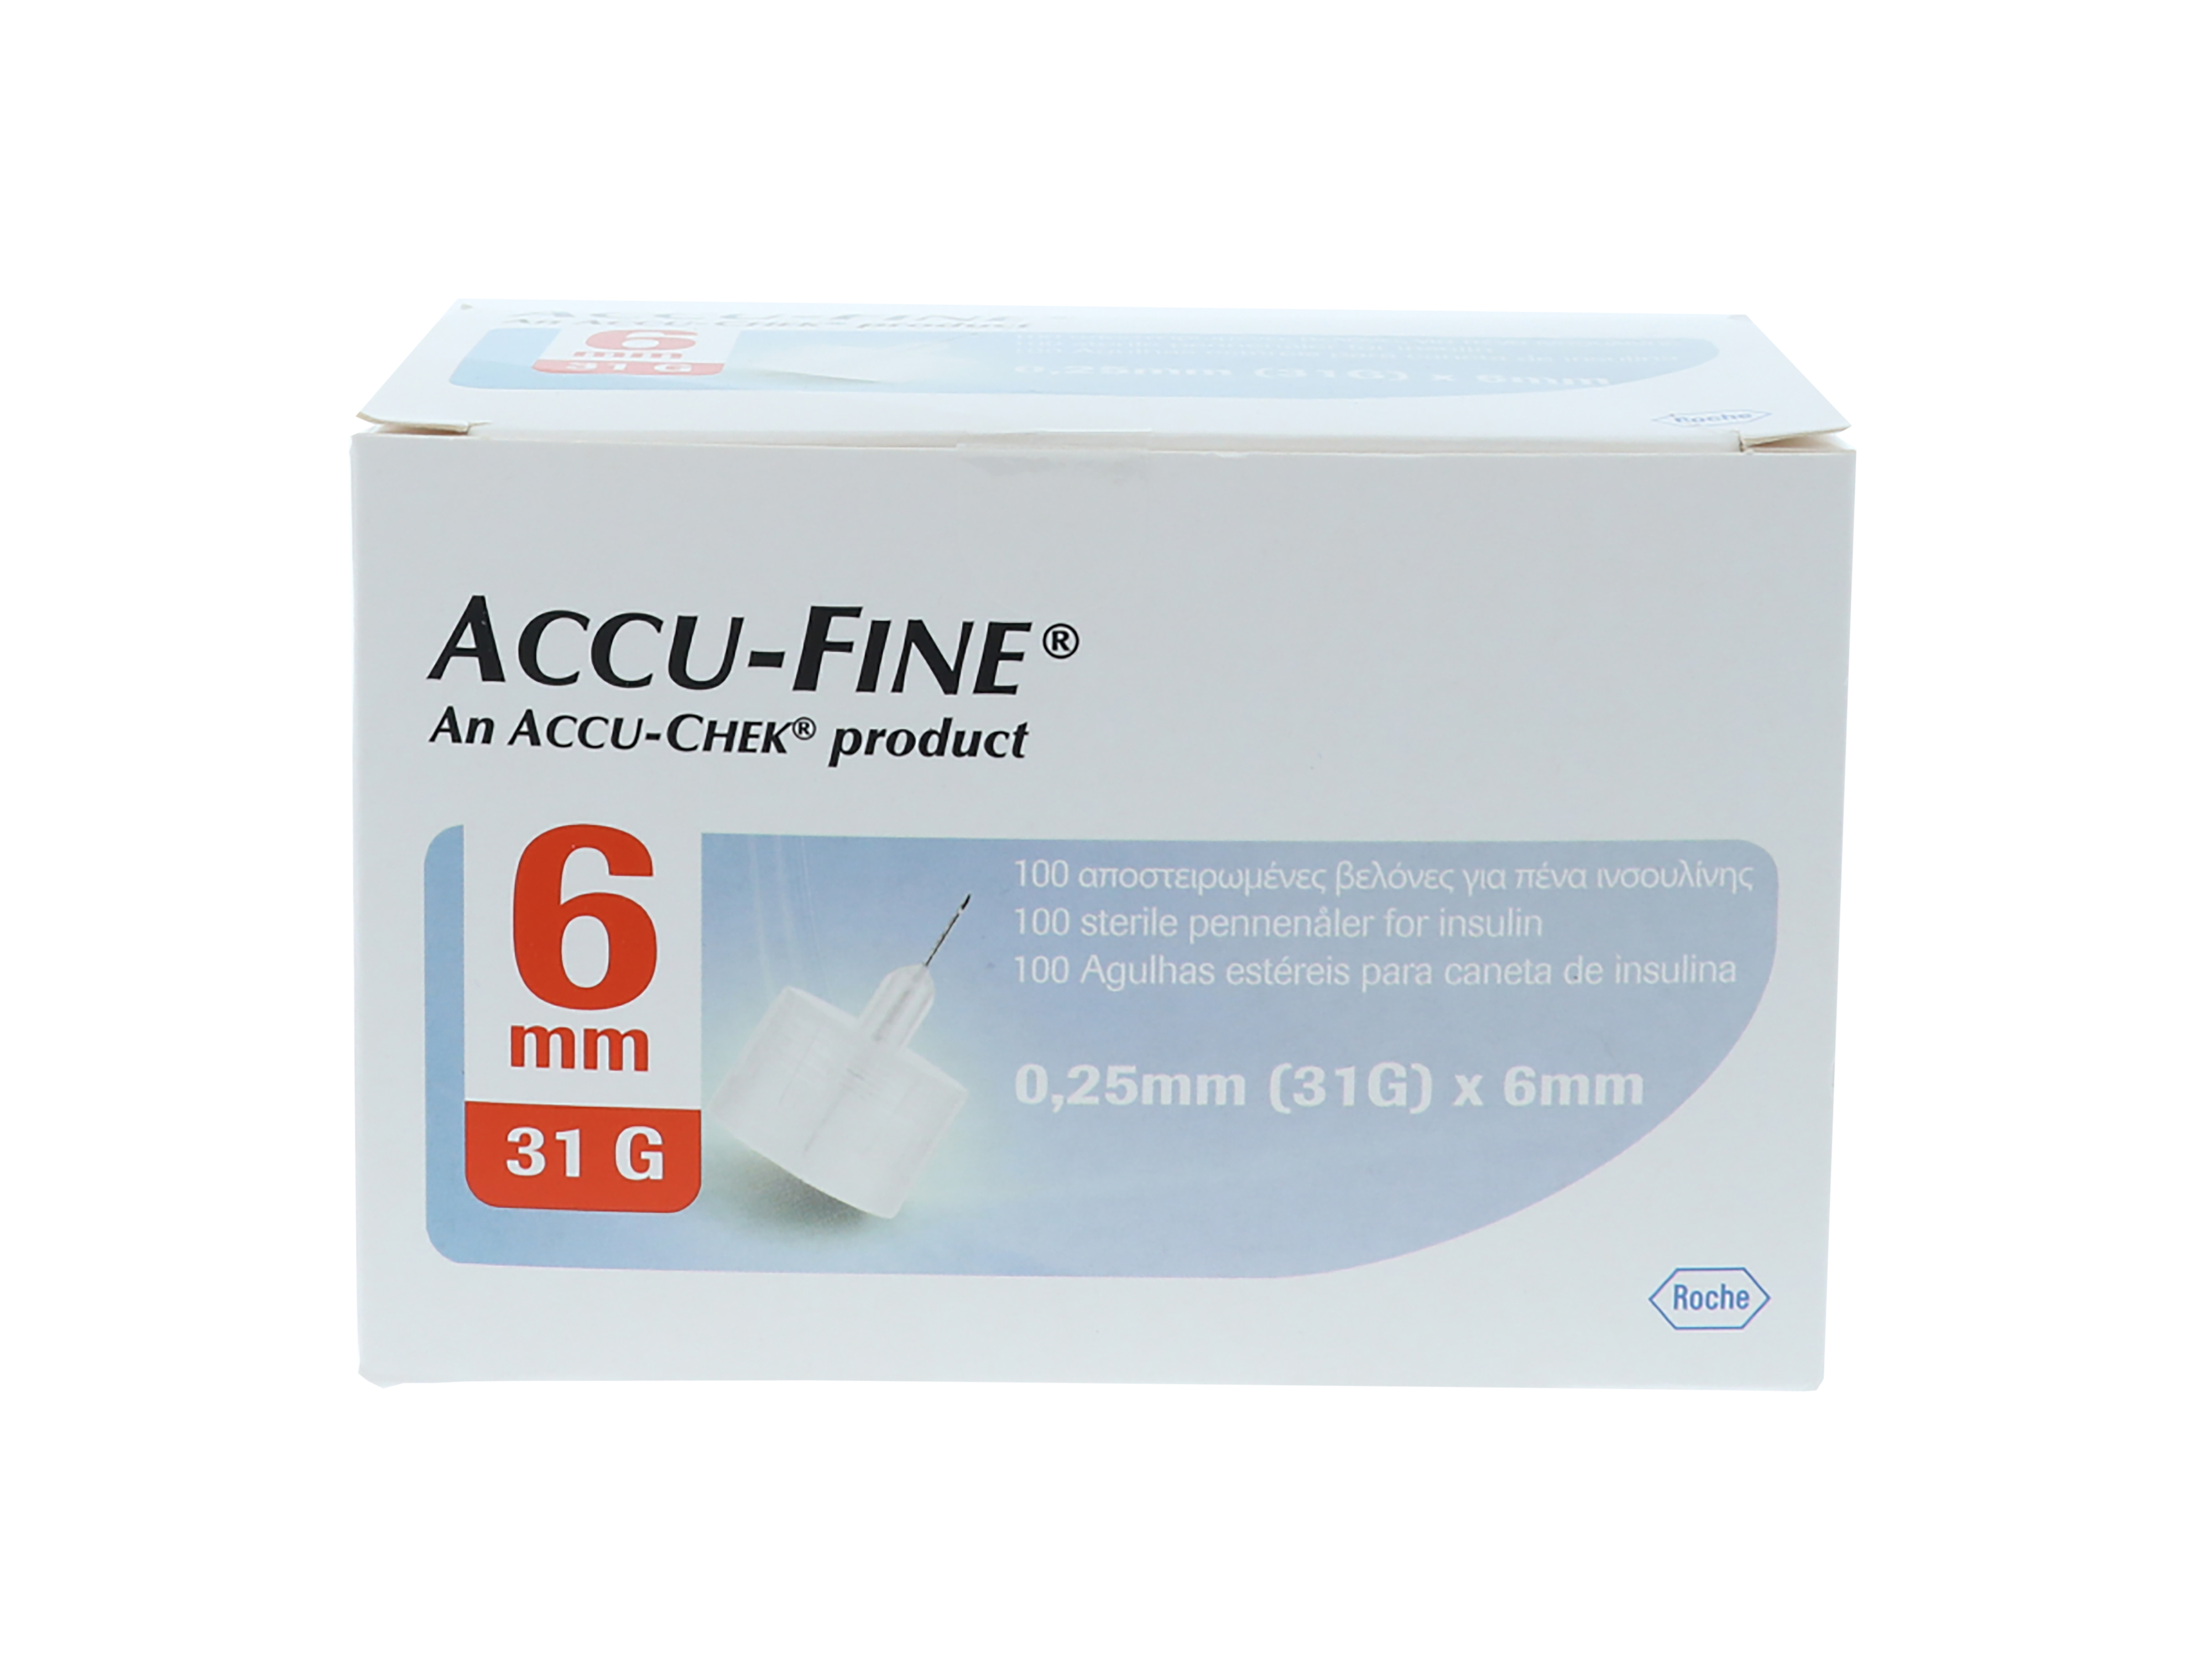 Accu-fine Pennekanyler til insulinpenner, 31G 6mm (0,25mm x 6mm), 100 stk